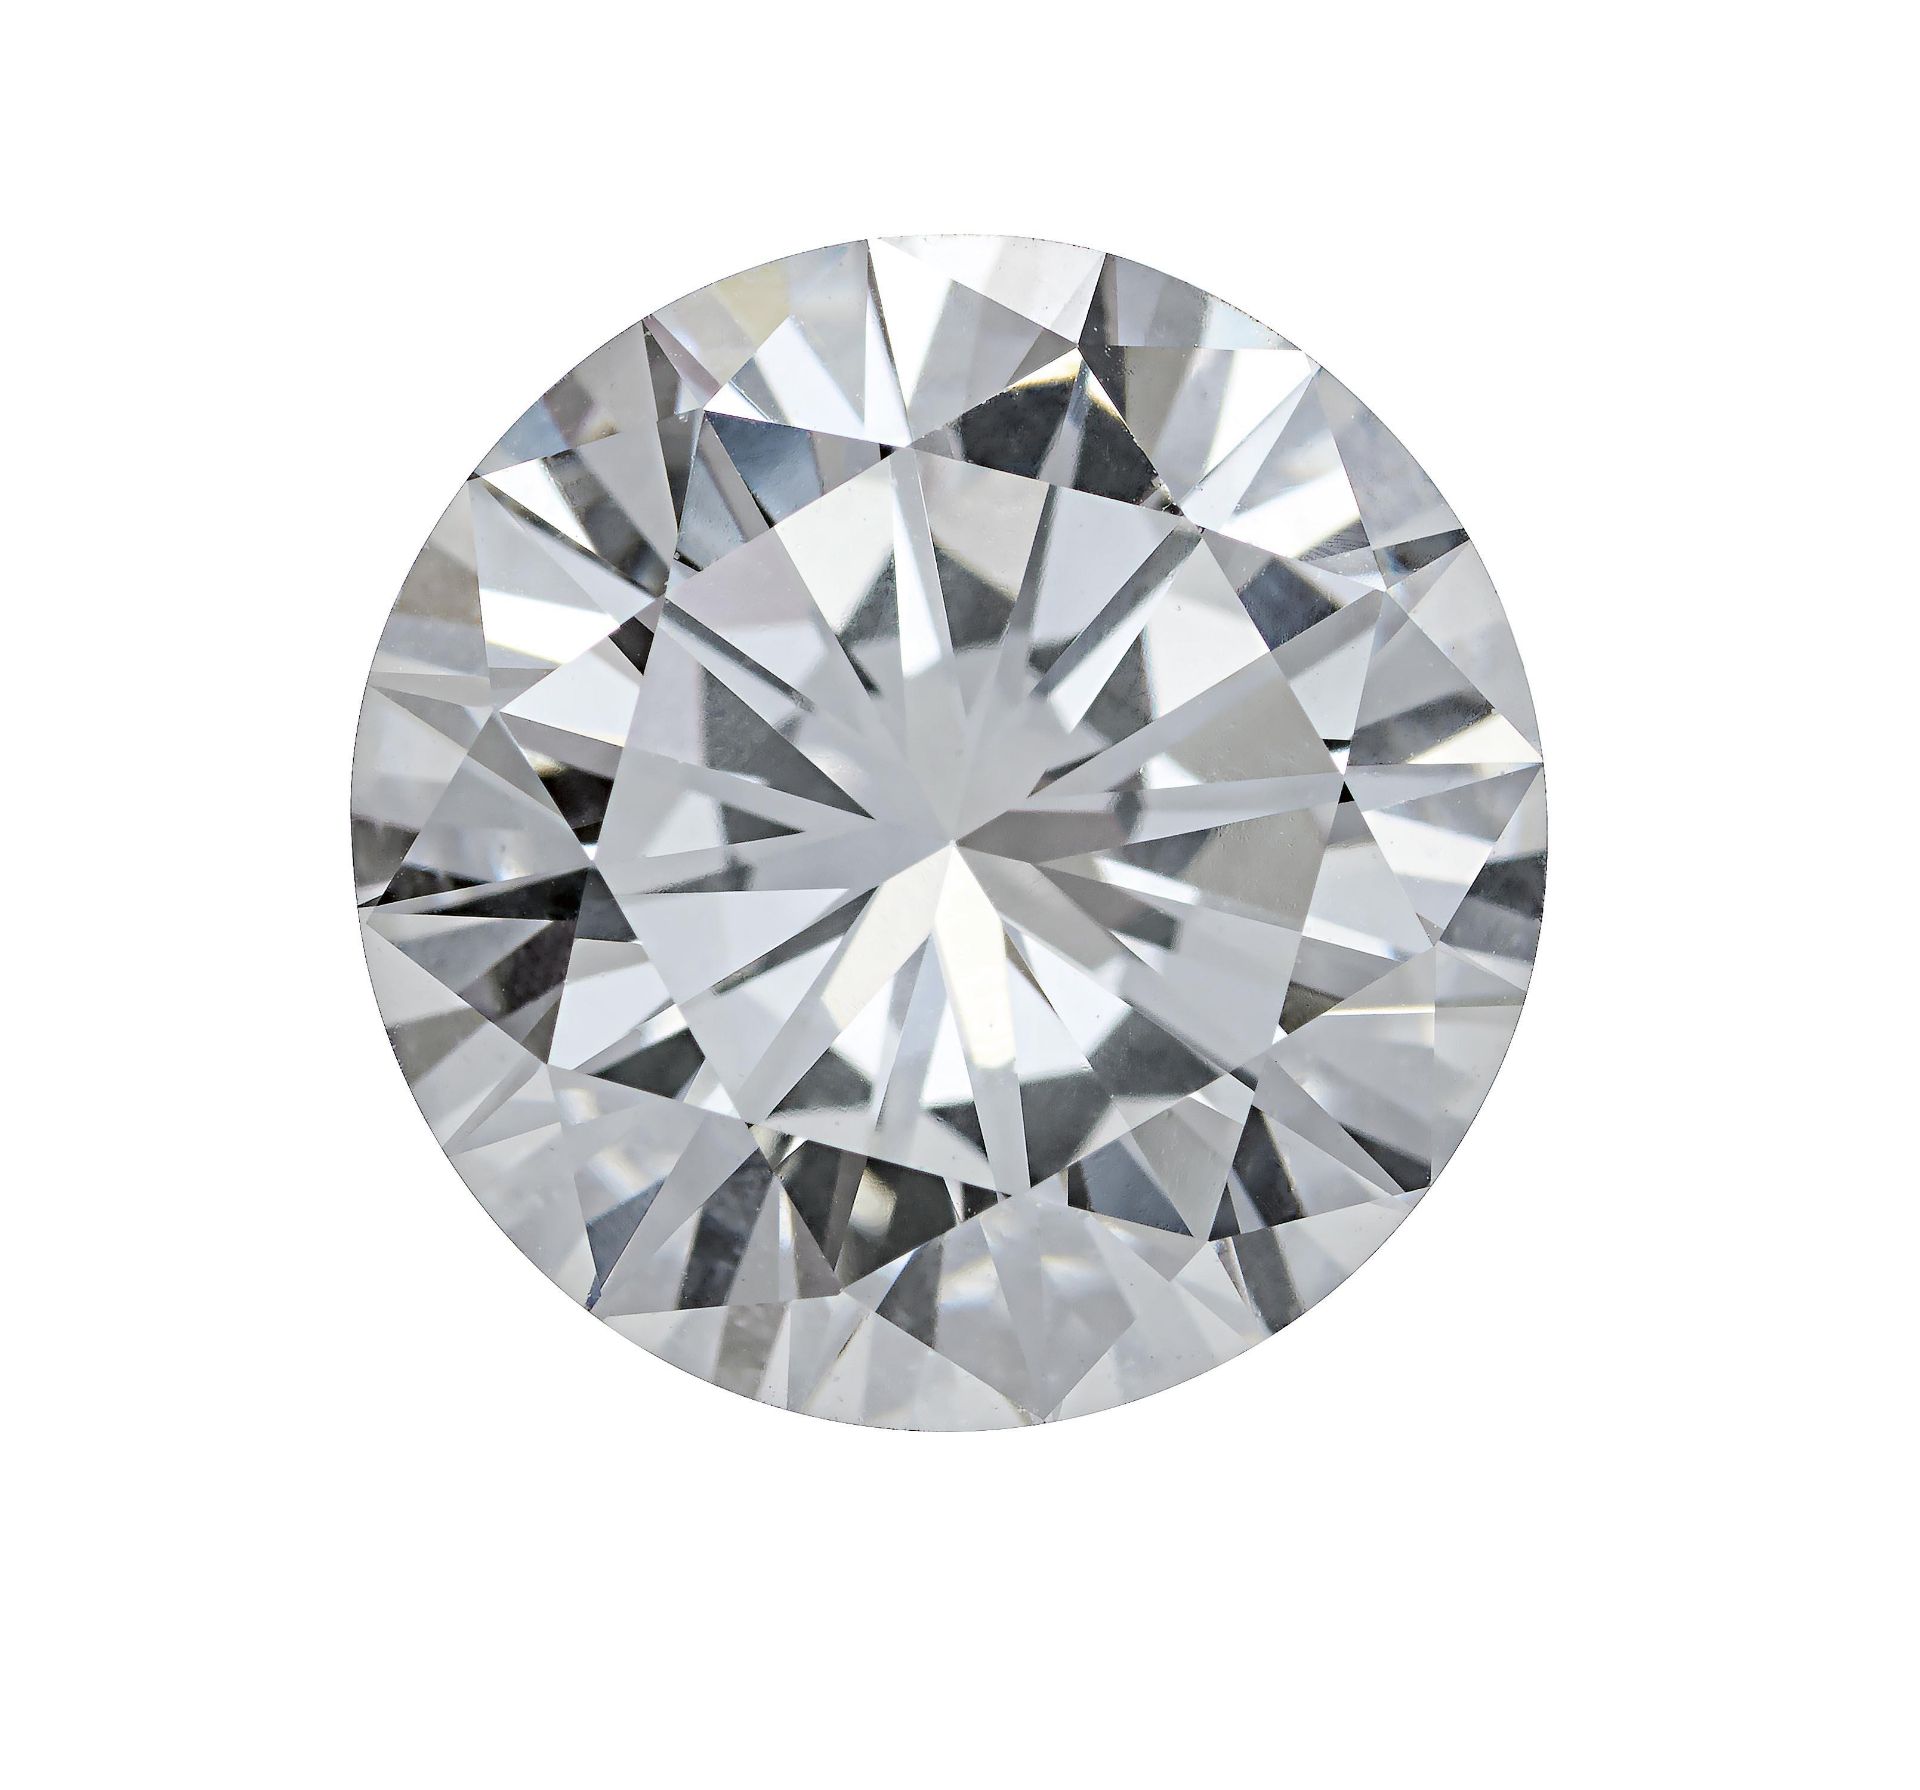 Unmounted Brilliant-cut Diamond - Image 2 of 2